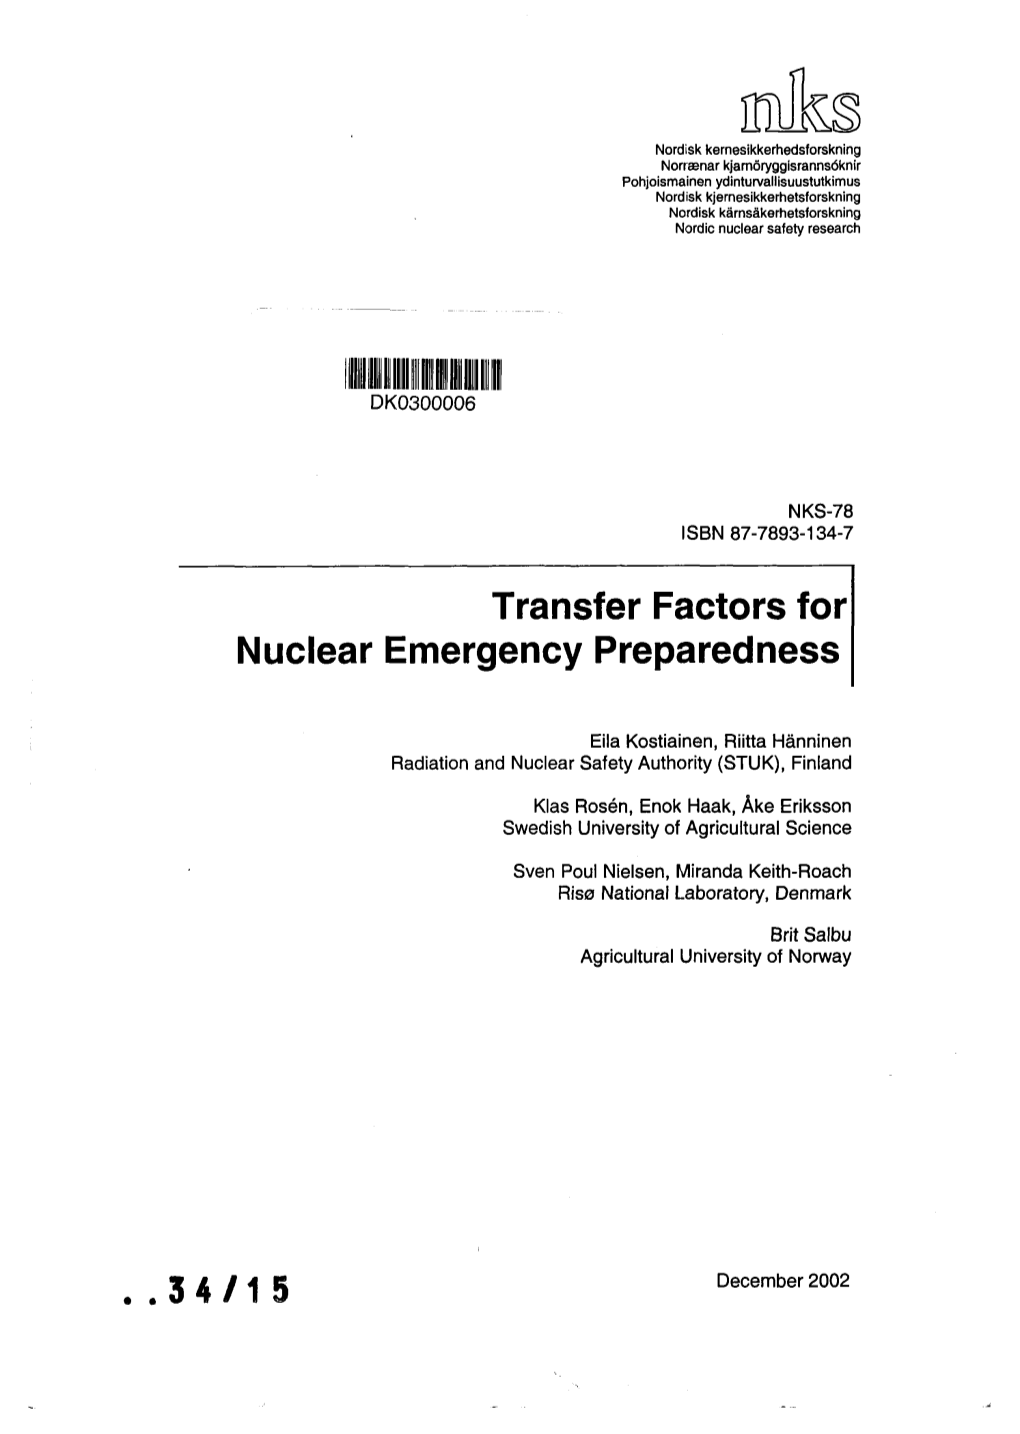 Transfer Factors for Nuclear Emergency Preparedness